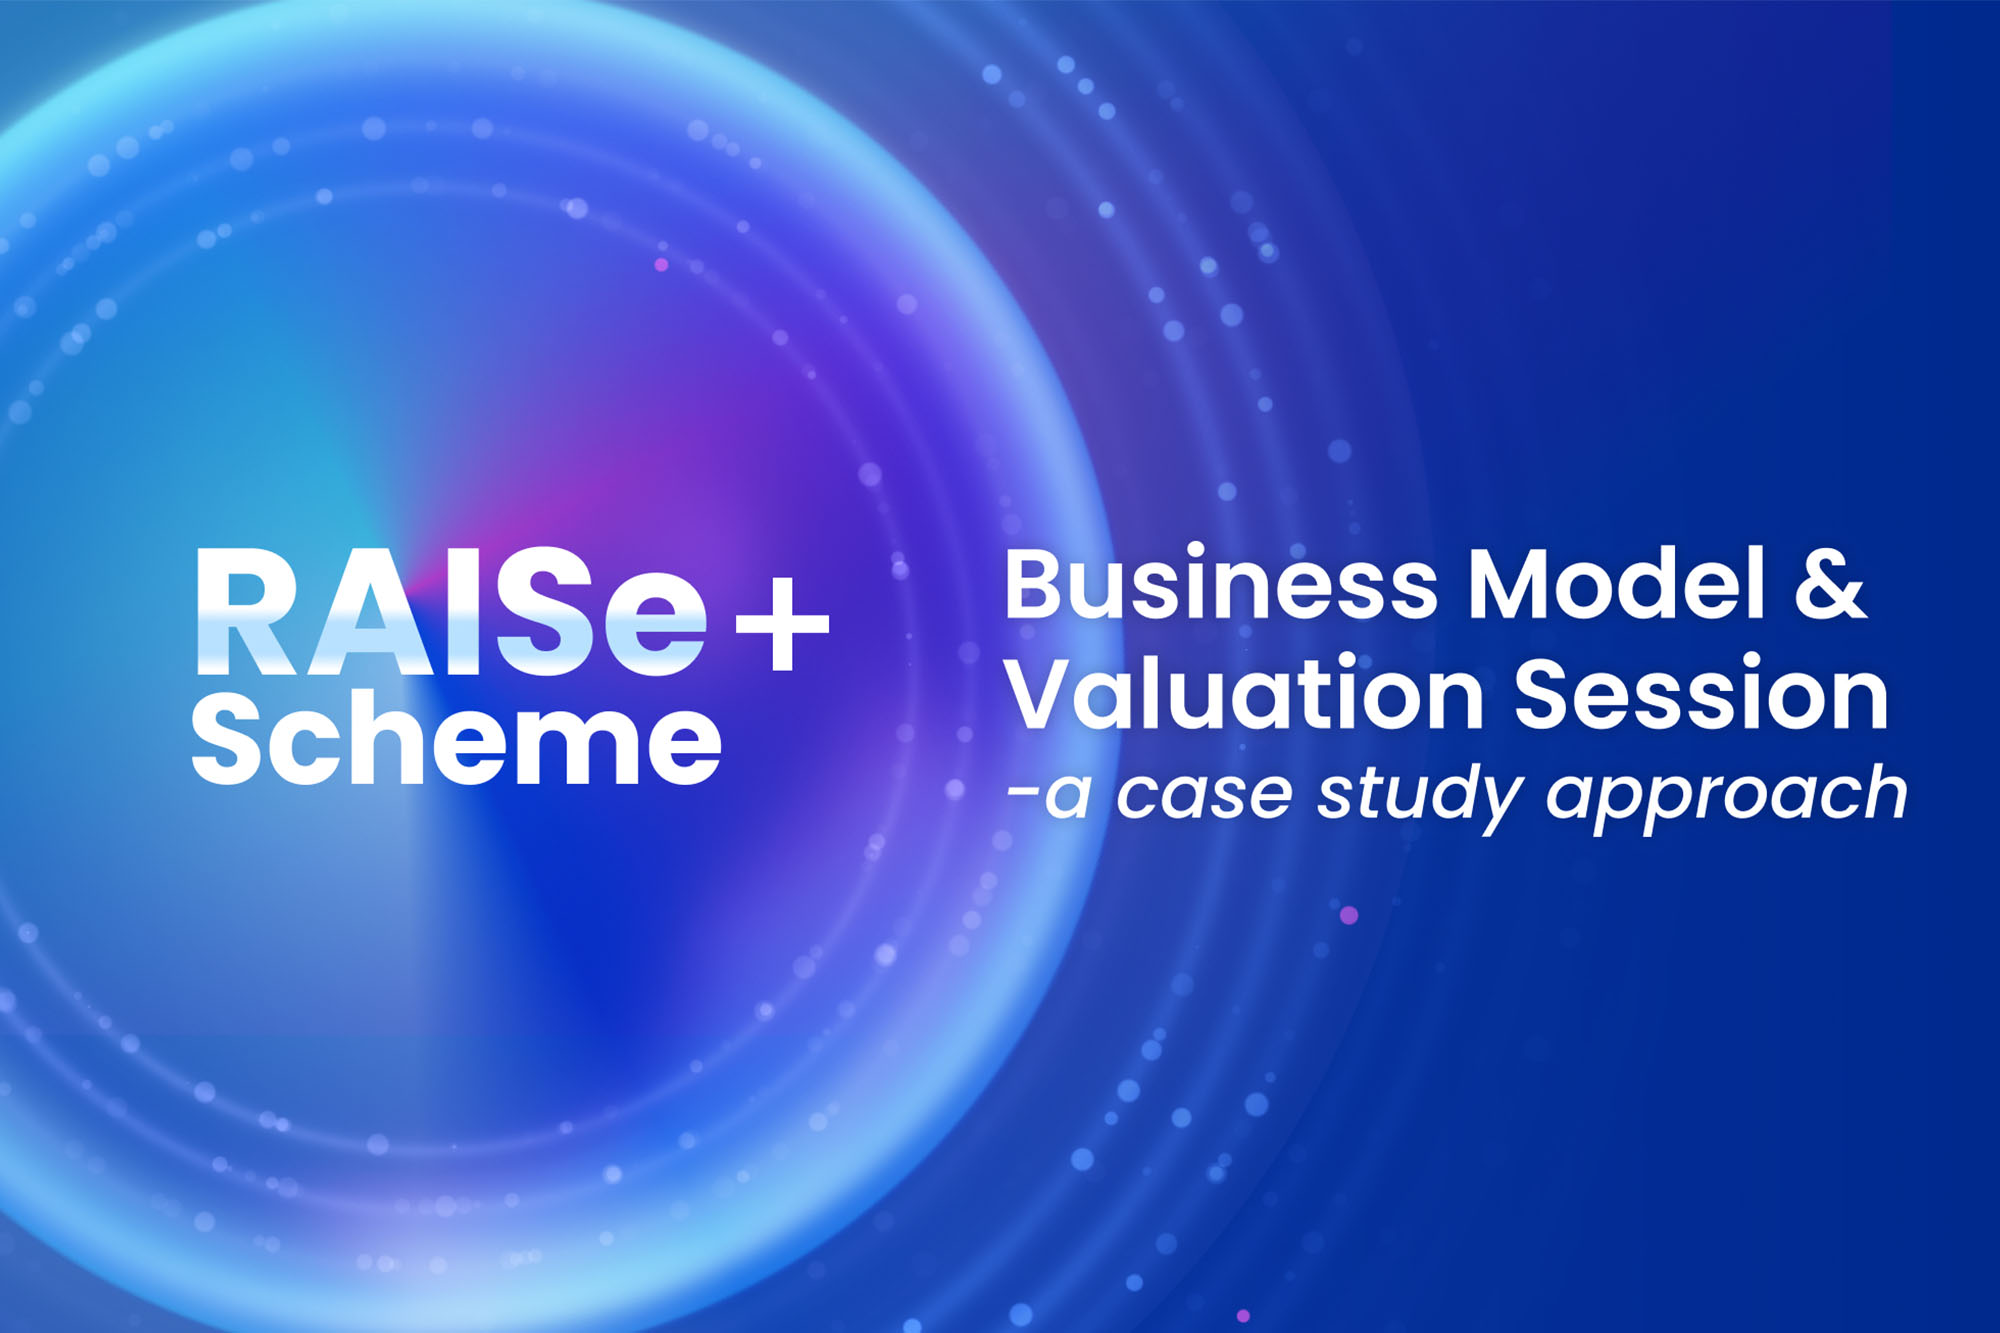 RAISe+ Business Model & Valuation Session